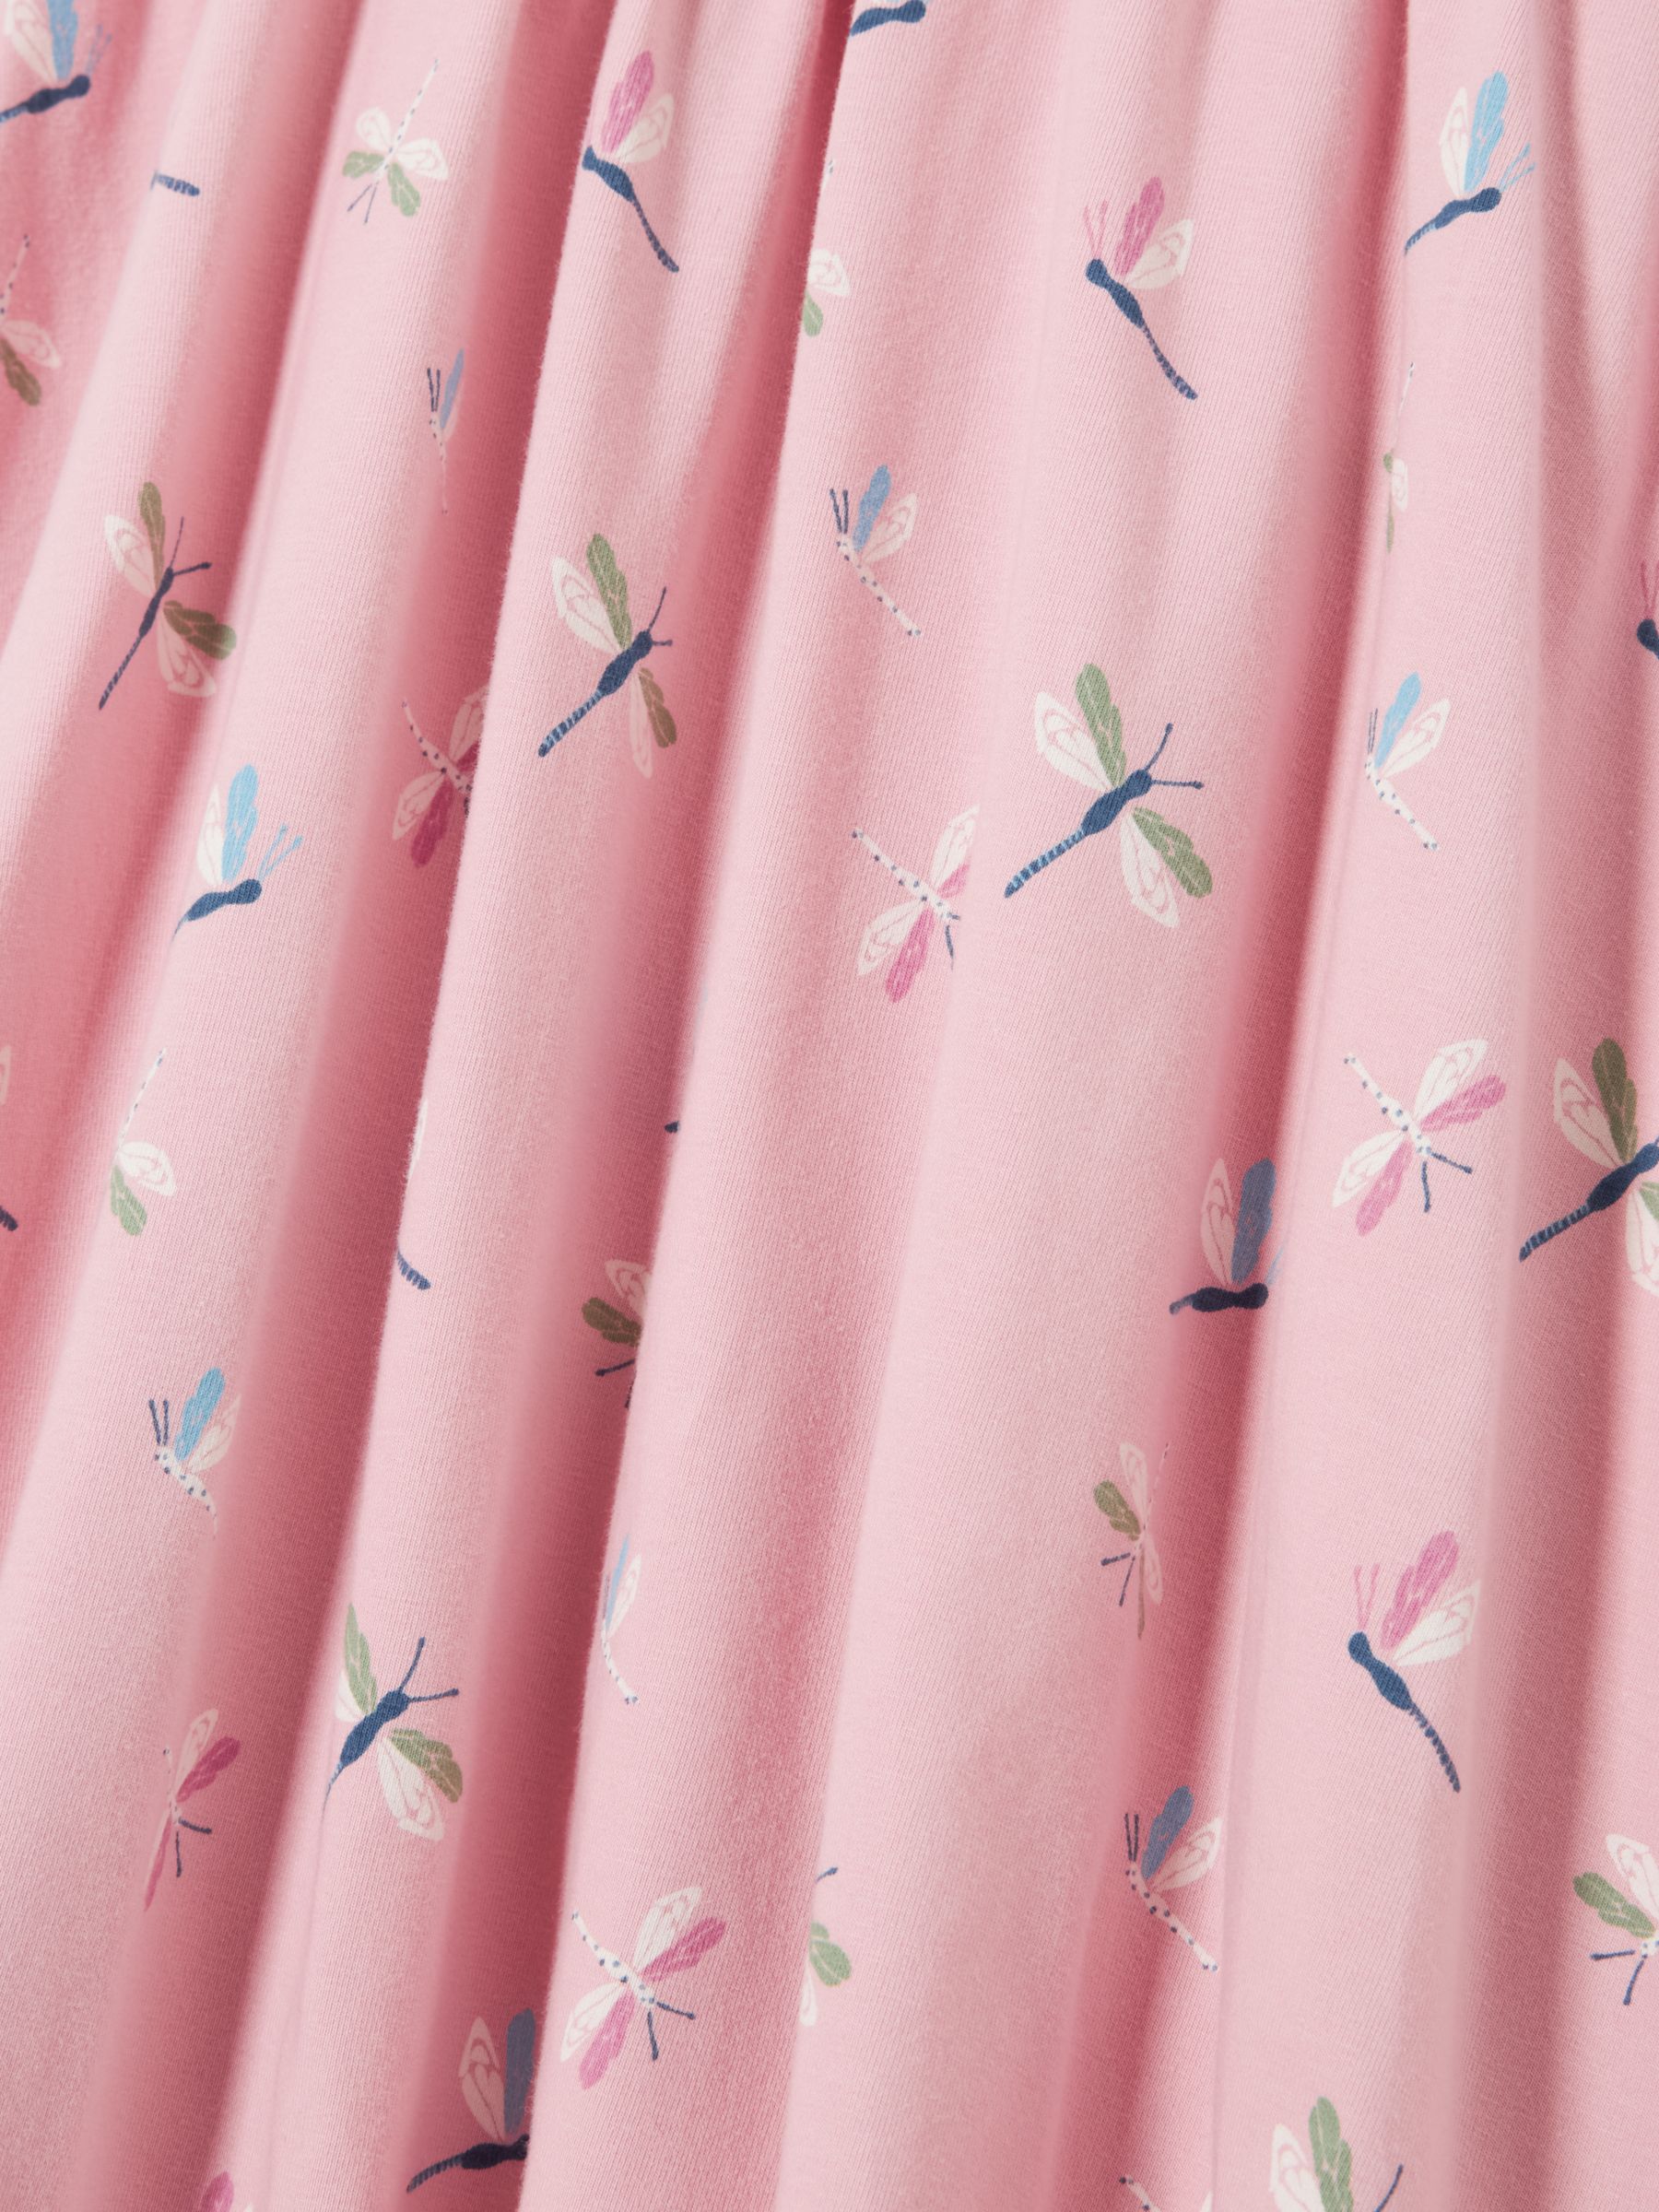 John Lewis Kids' Dragonfly Print Pleated Dress, Pink, 9 years